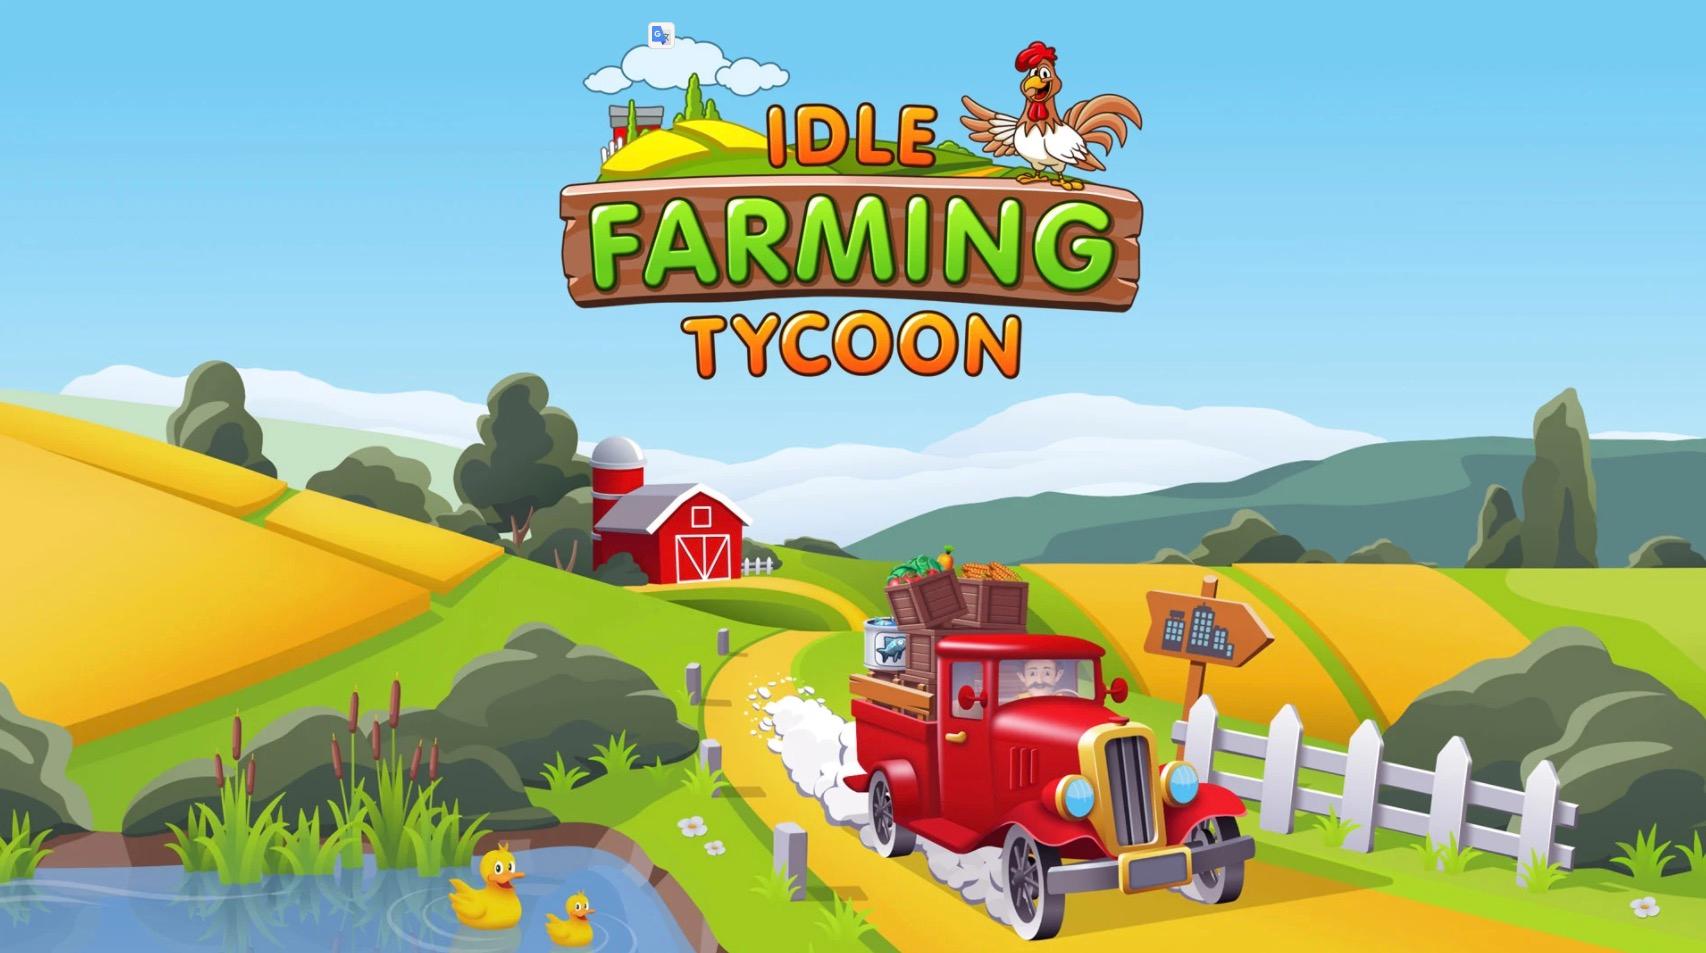 Idle Farming Tycoon